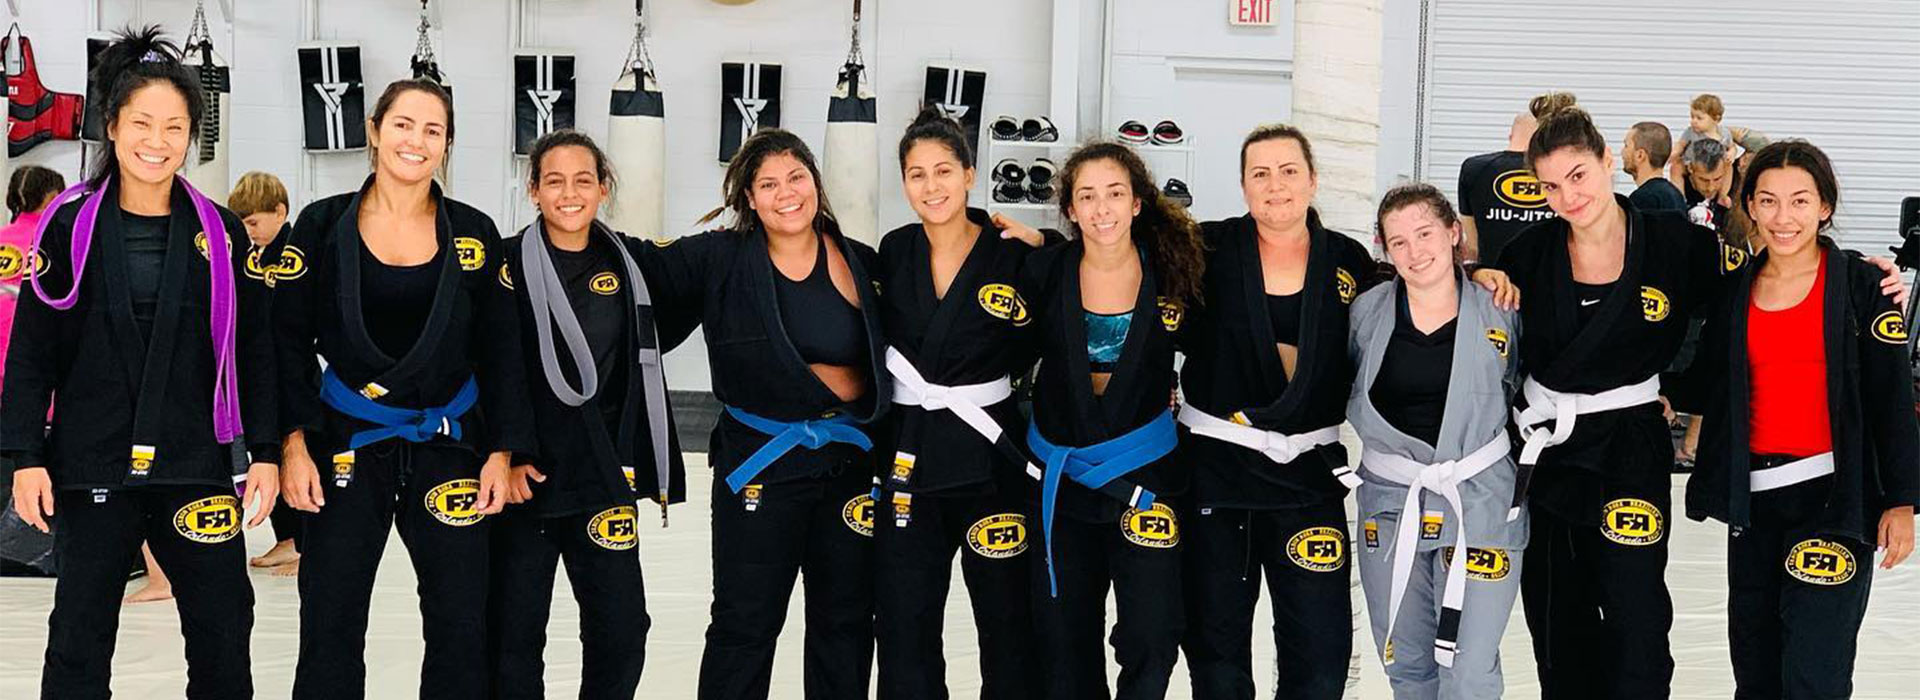 Women’s Only Brazilian Jiu Jitsu Program Near Me In Altamonte Springs, Florida